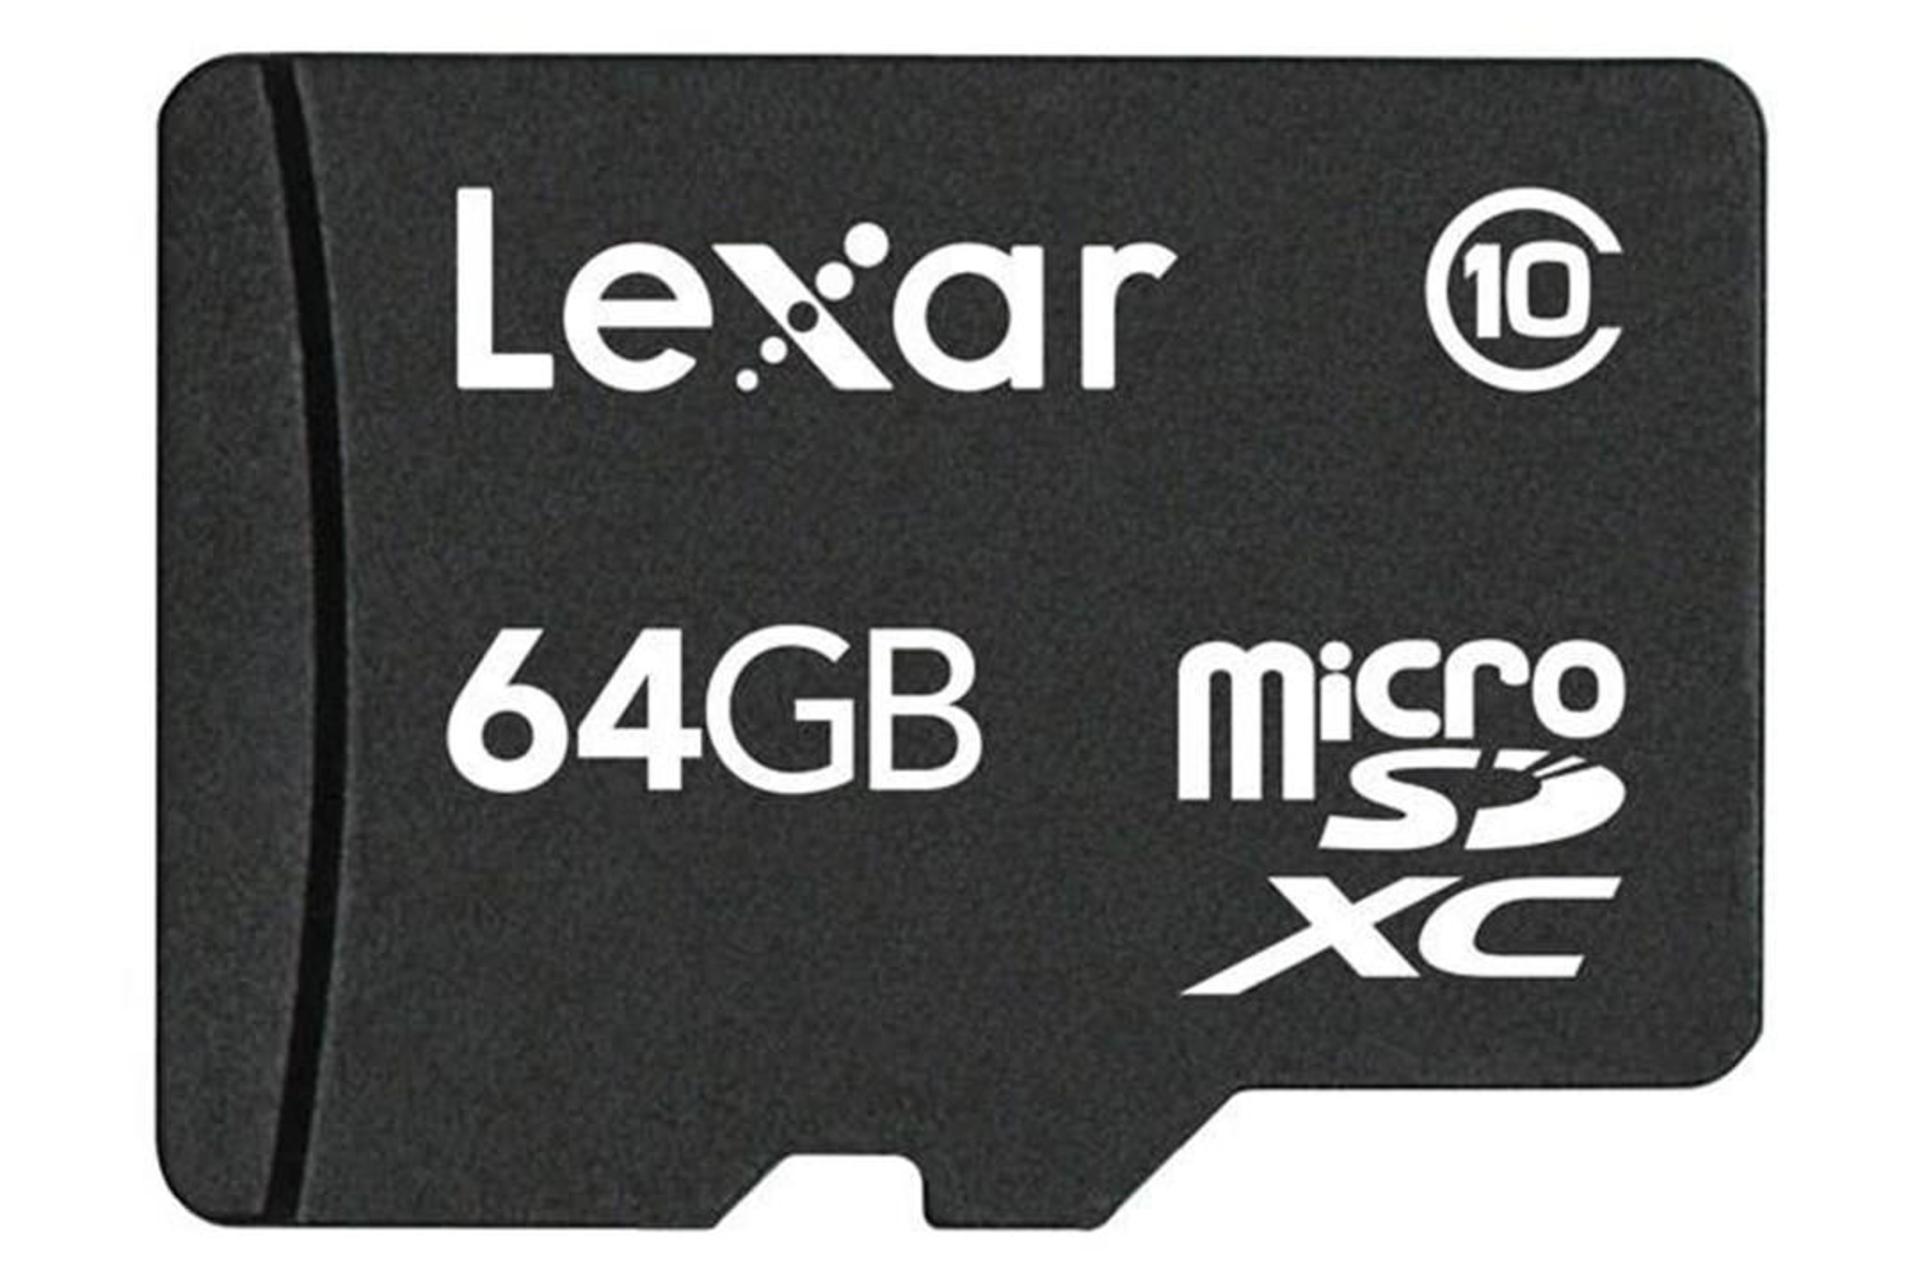 Lexar microSDXC Class 10 64GB